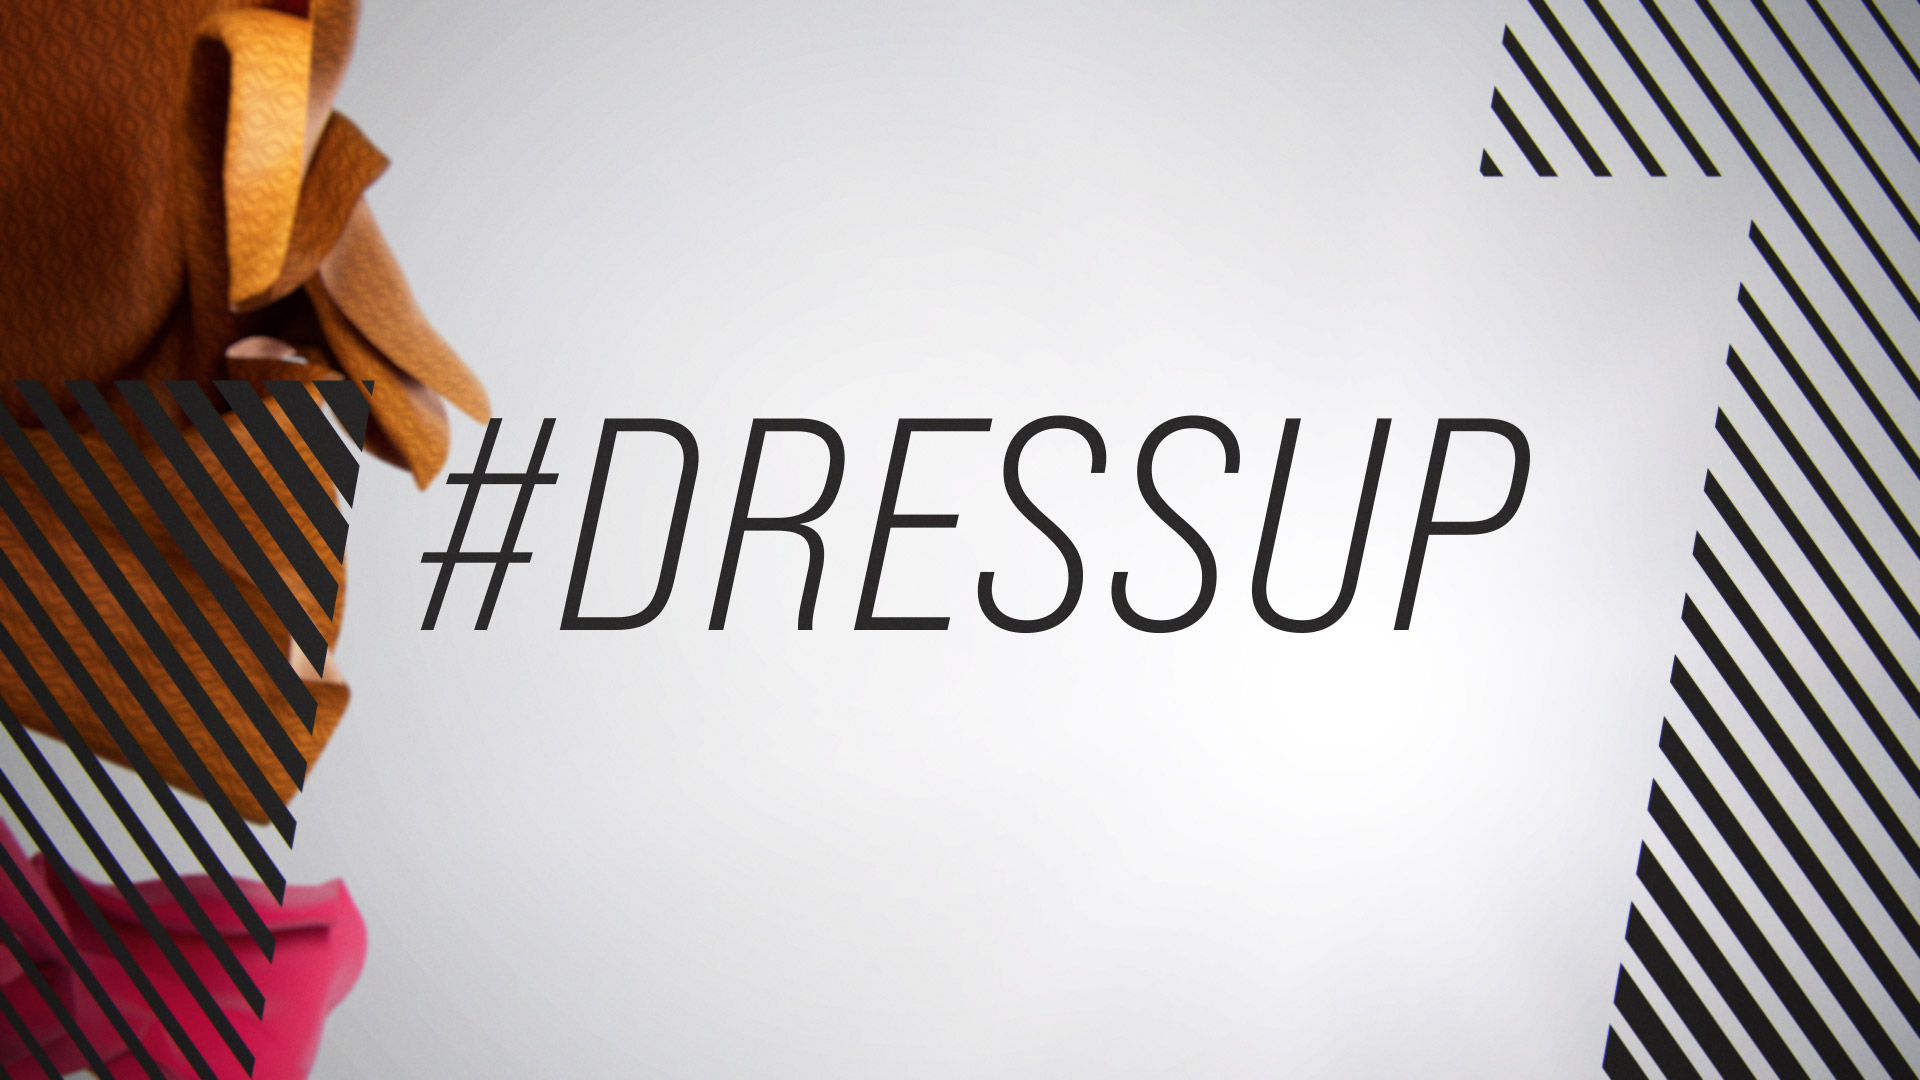 DressUp Web SVP Board Hashtag 5 dmcgroup